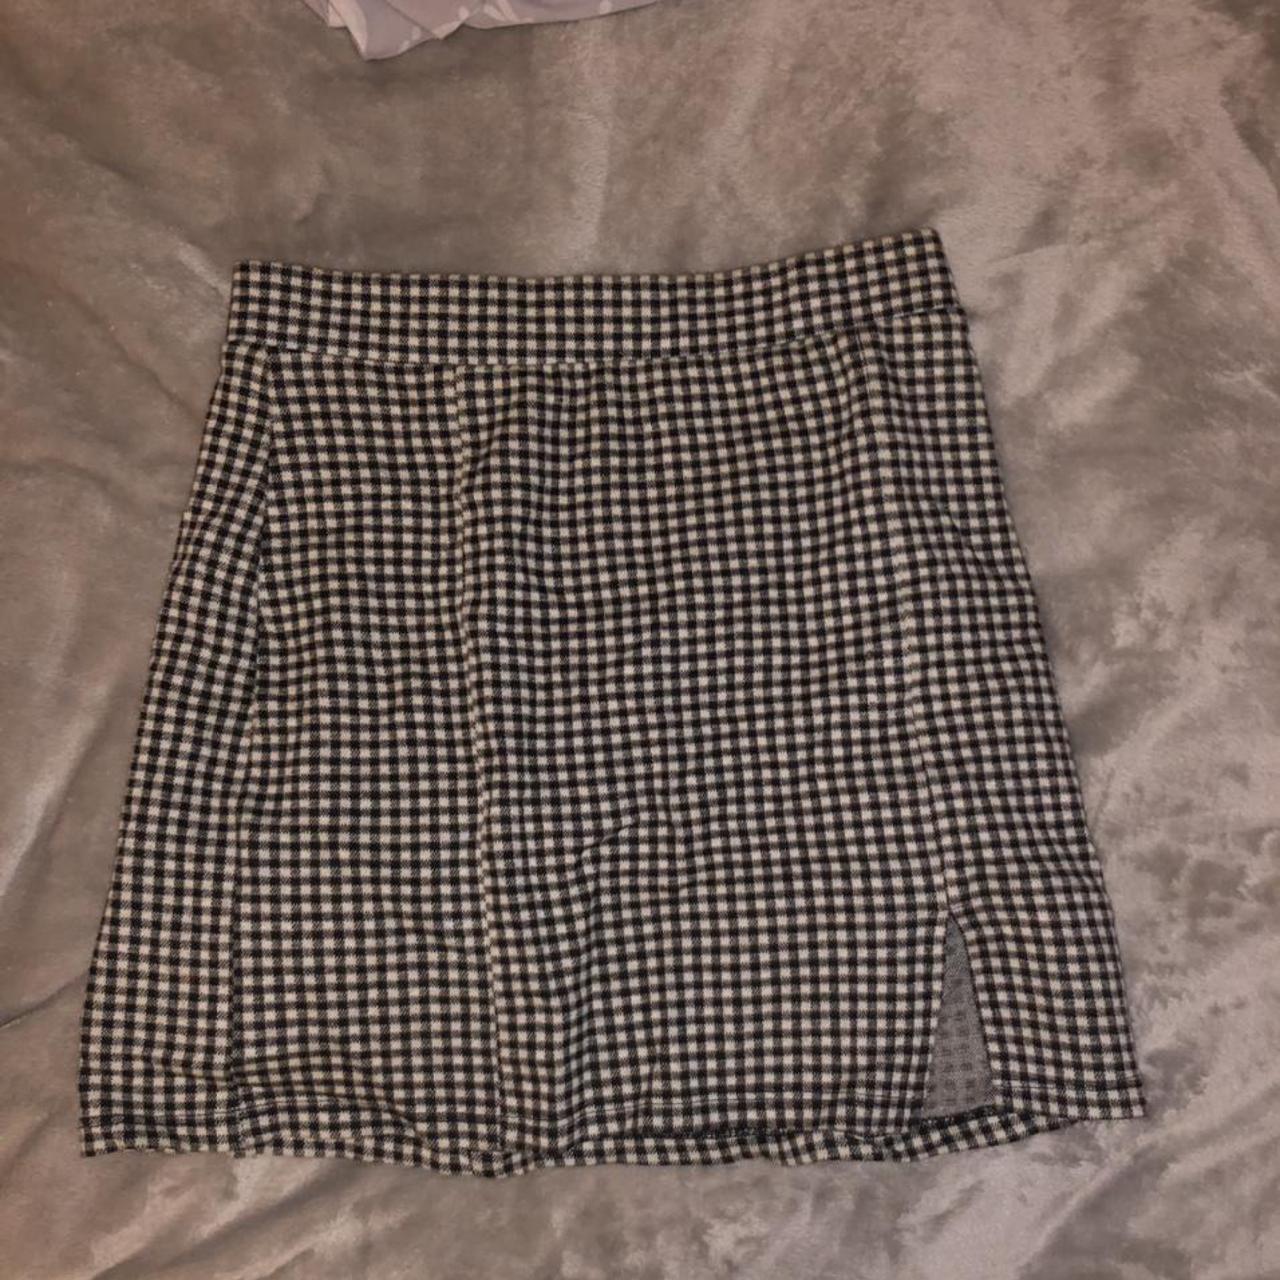 Bershka plaid black and white mini skirt size S worn... - Depop